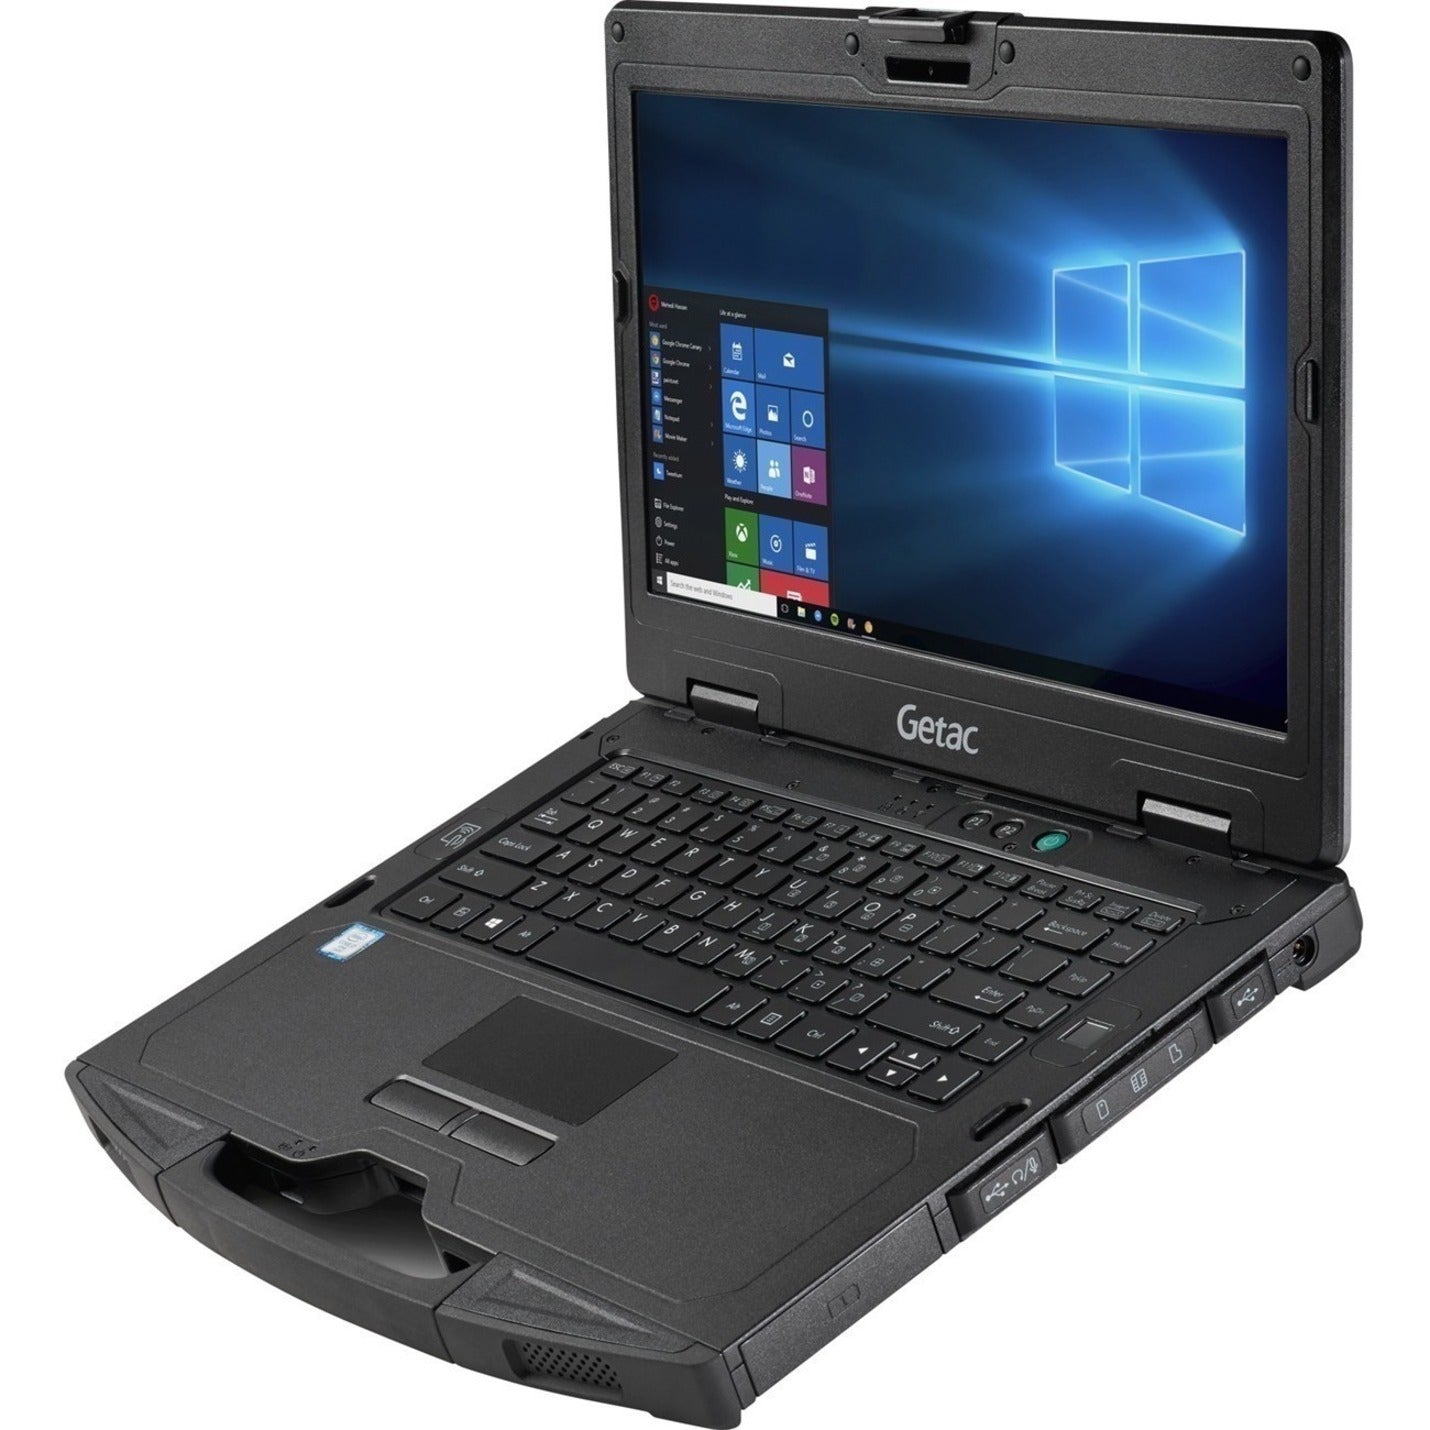 Getac SP2N5ACASDXX S410 G4 Notebook, Intel Core i5 1135G7 Processor, 8GB RAM, 256GB SSD, Windows 11 Pro